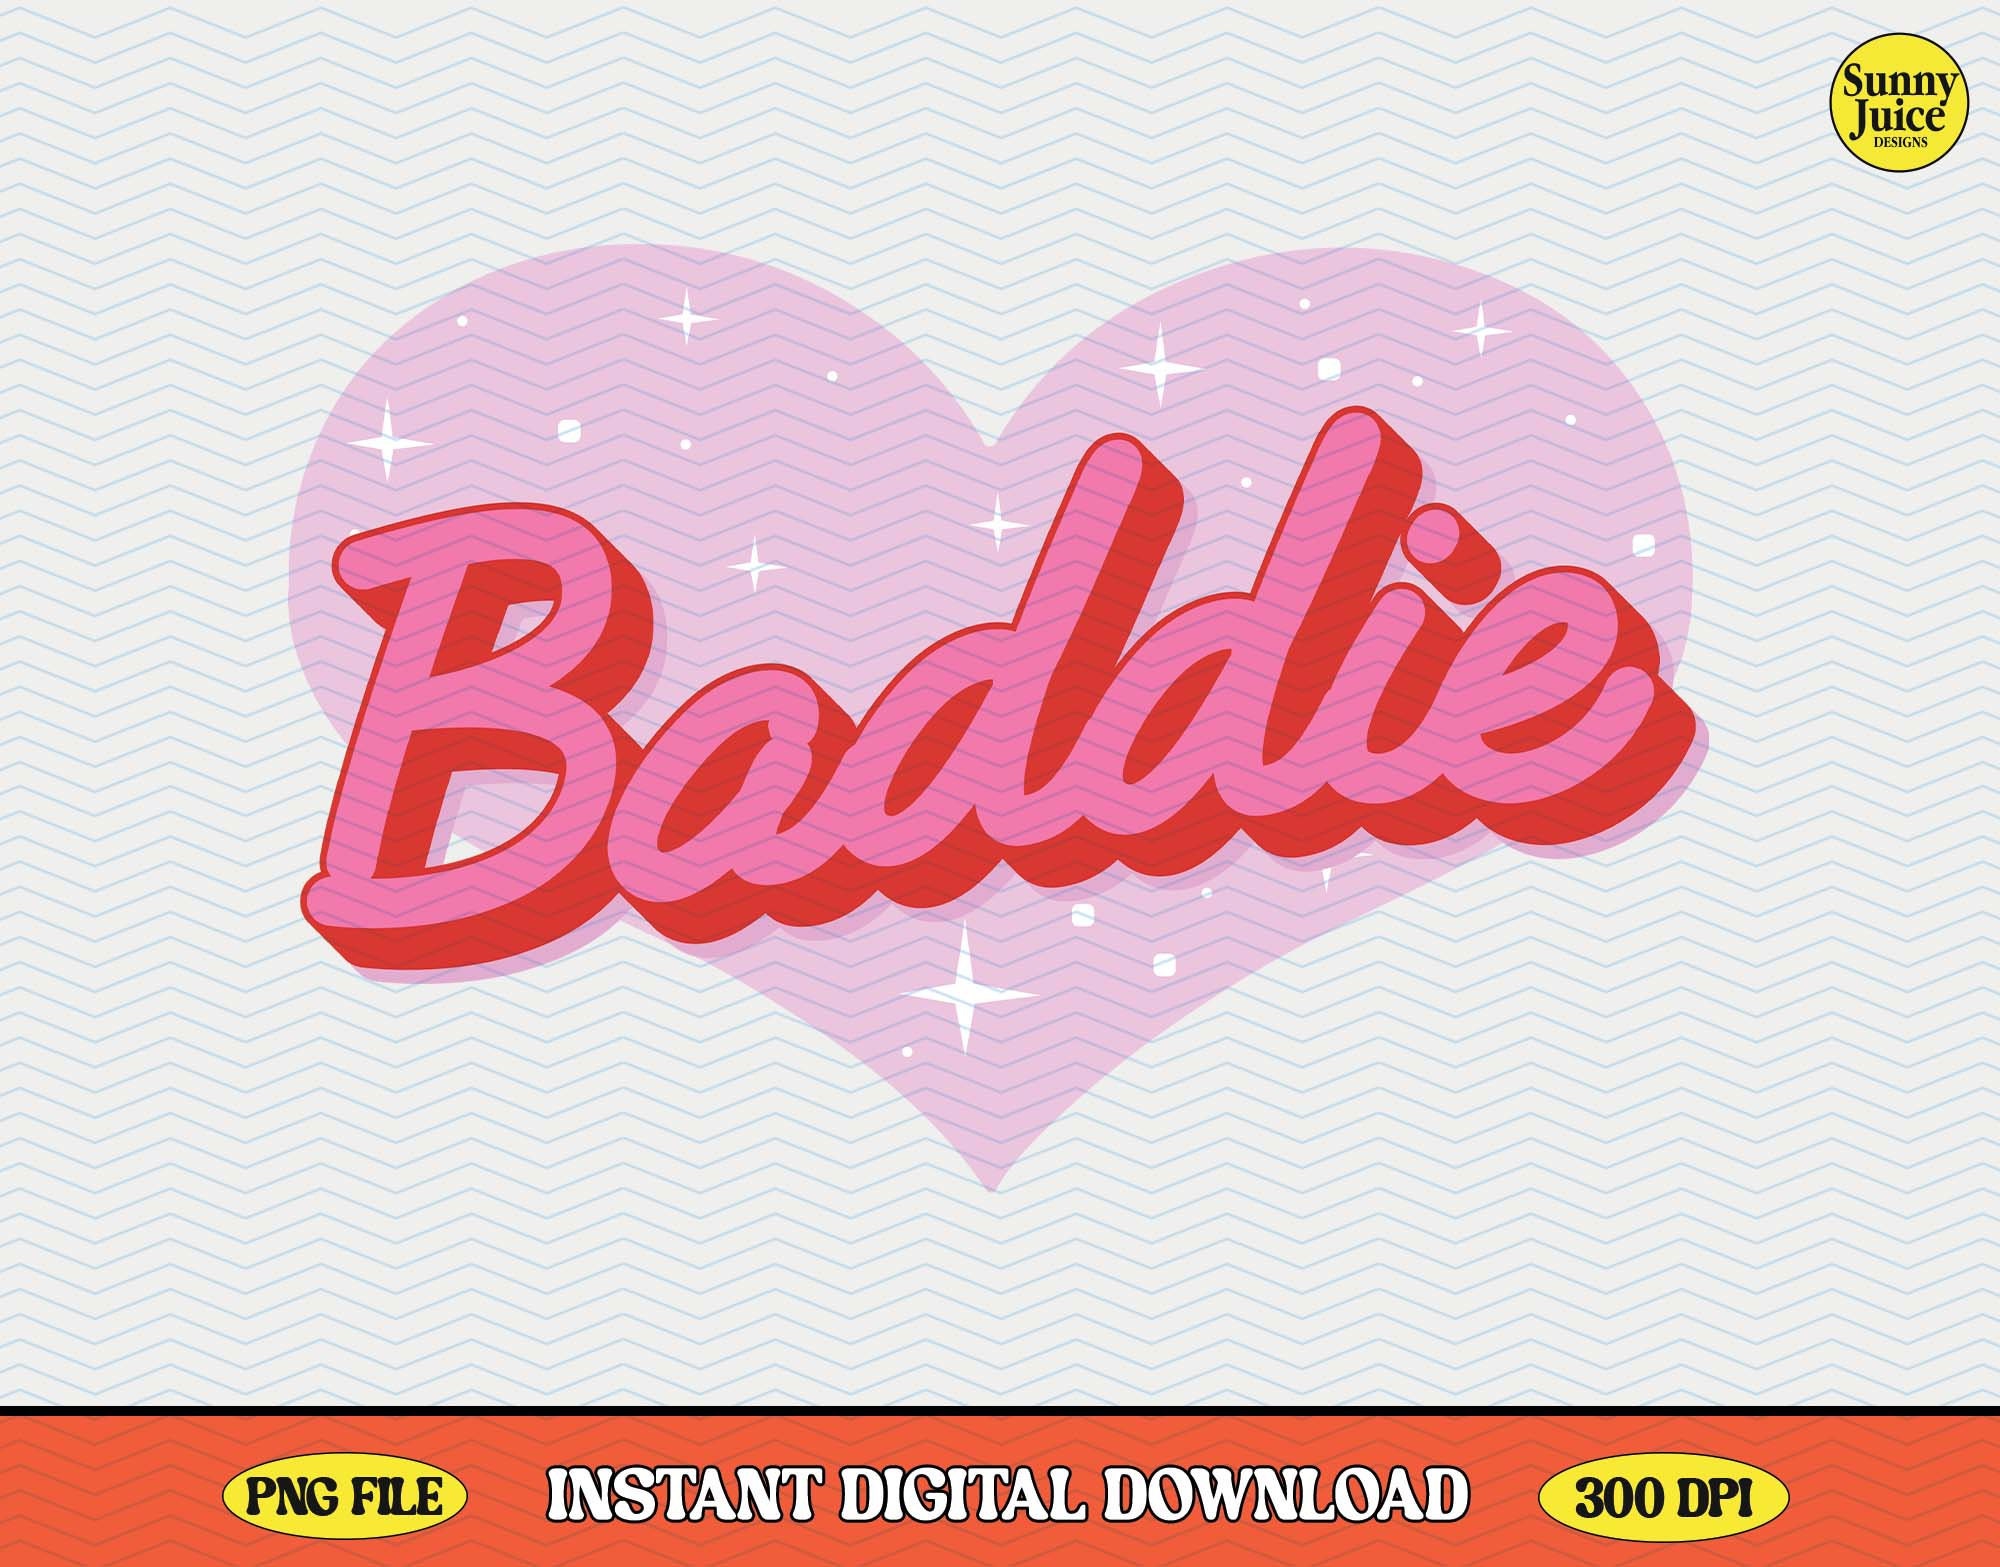 Baddies only download